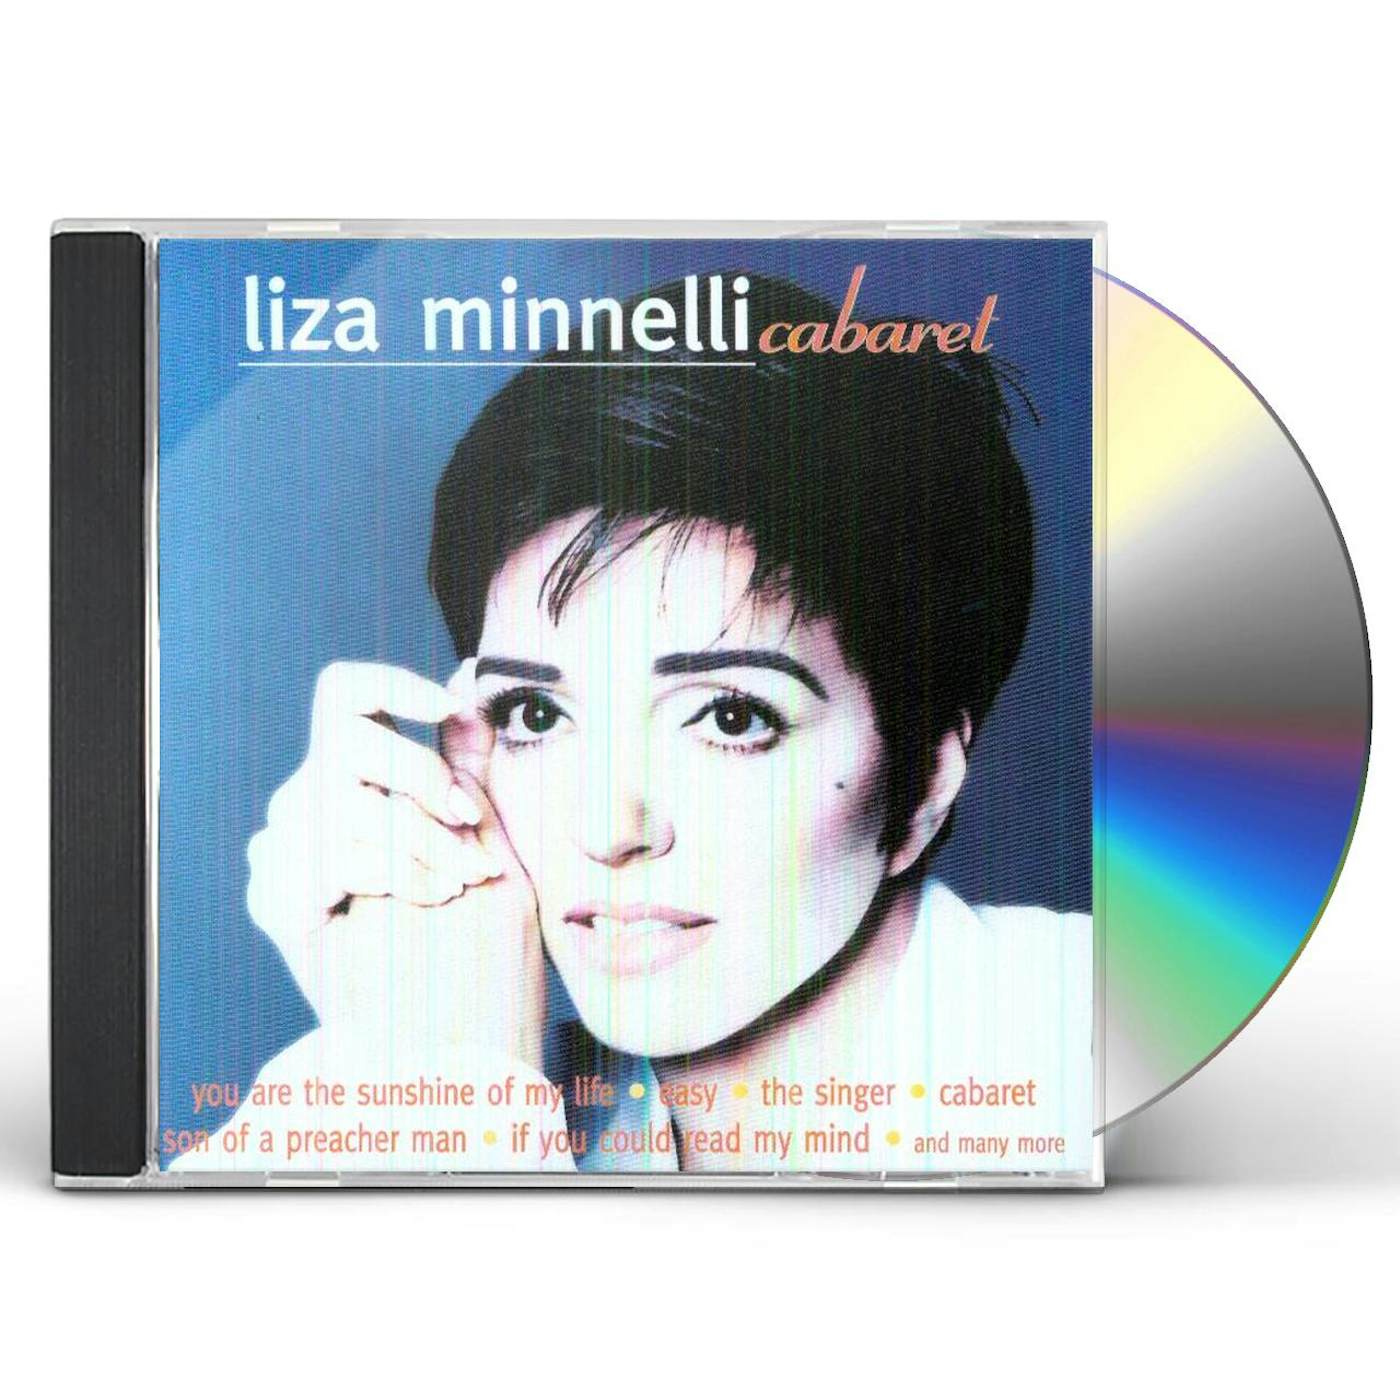 Liza Minnelli CABARET CD